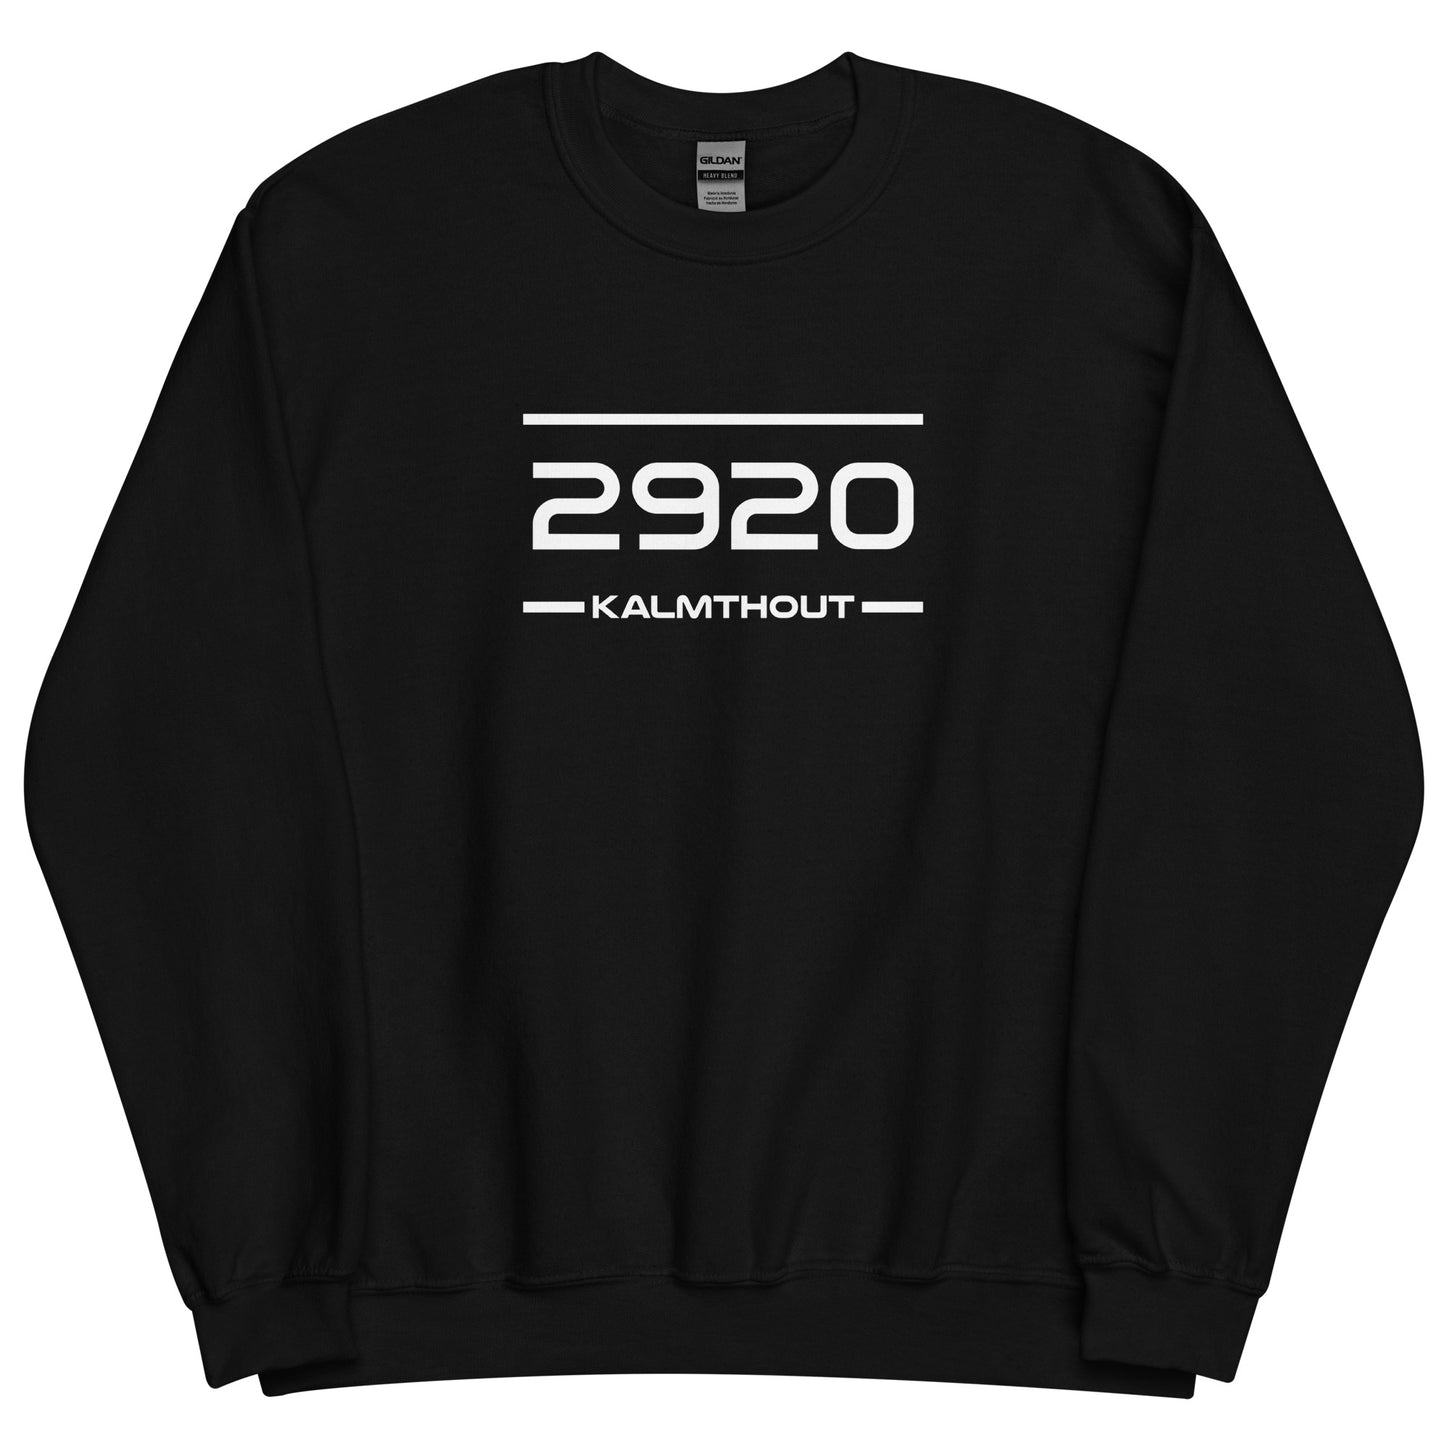 Sweater - 2920 - Kalmthout (M/V)